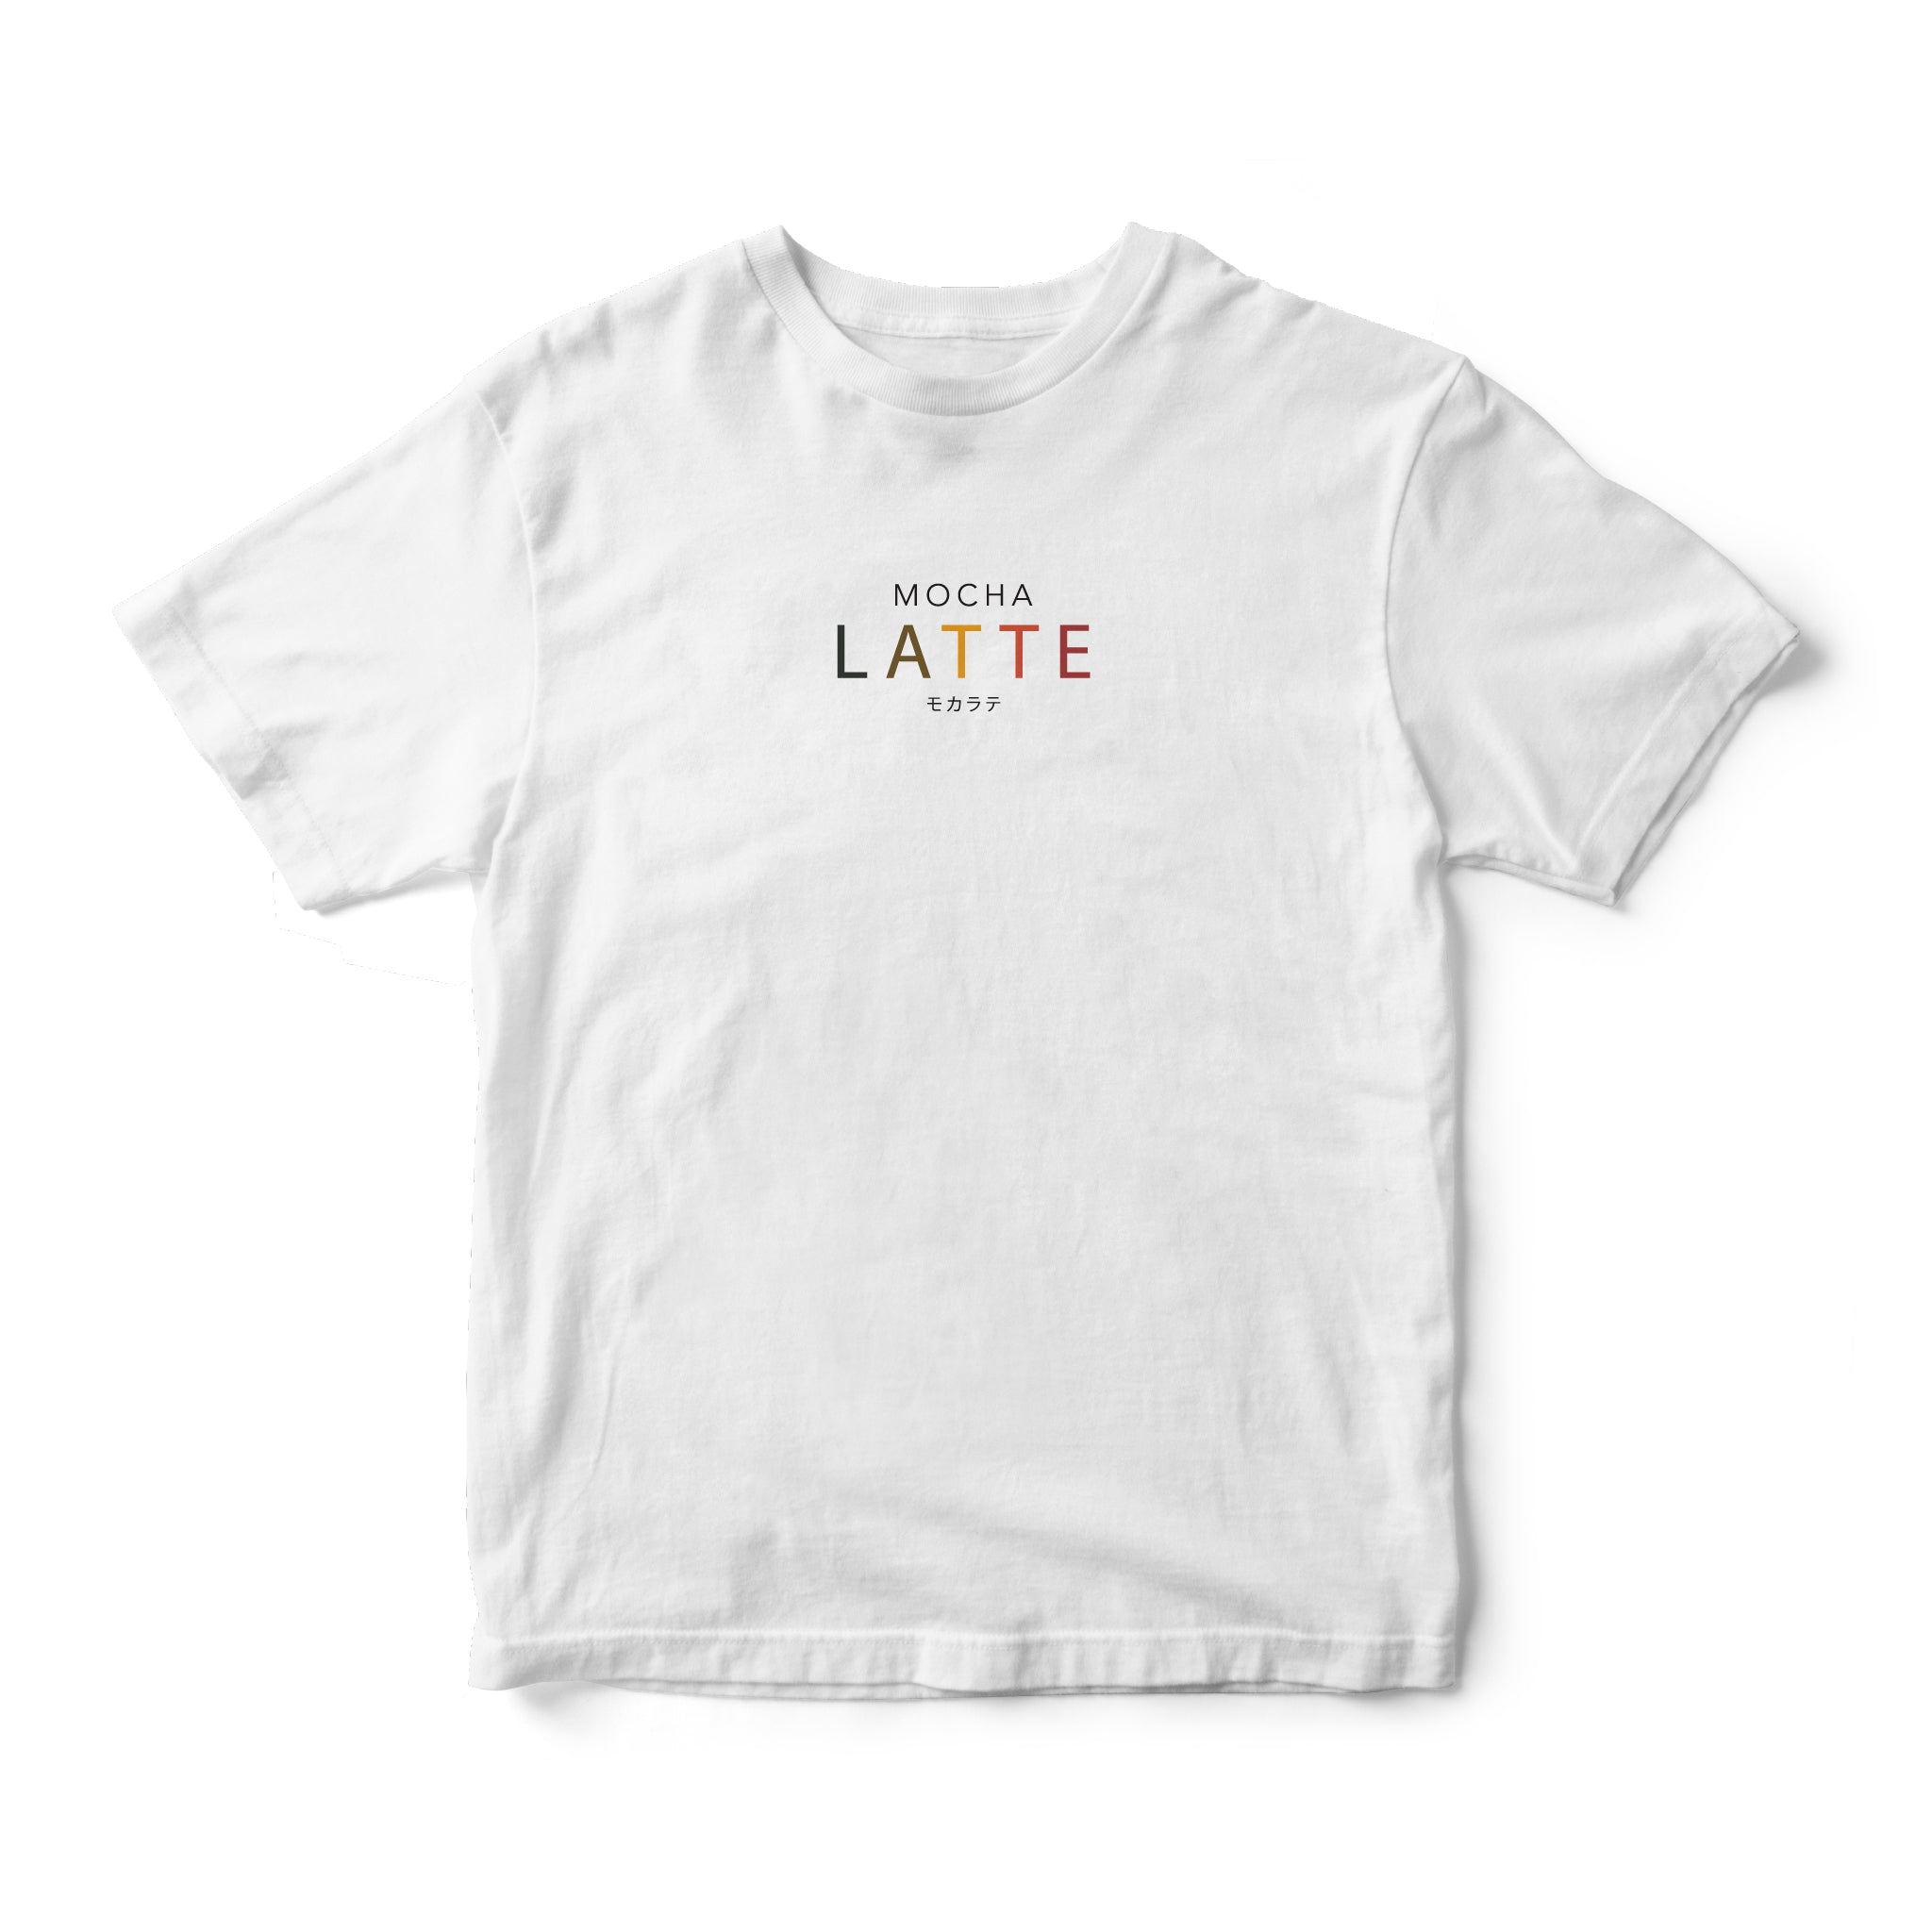 Instee Mocha Latte T-shirt Unisex 100% Cotton